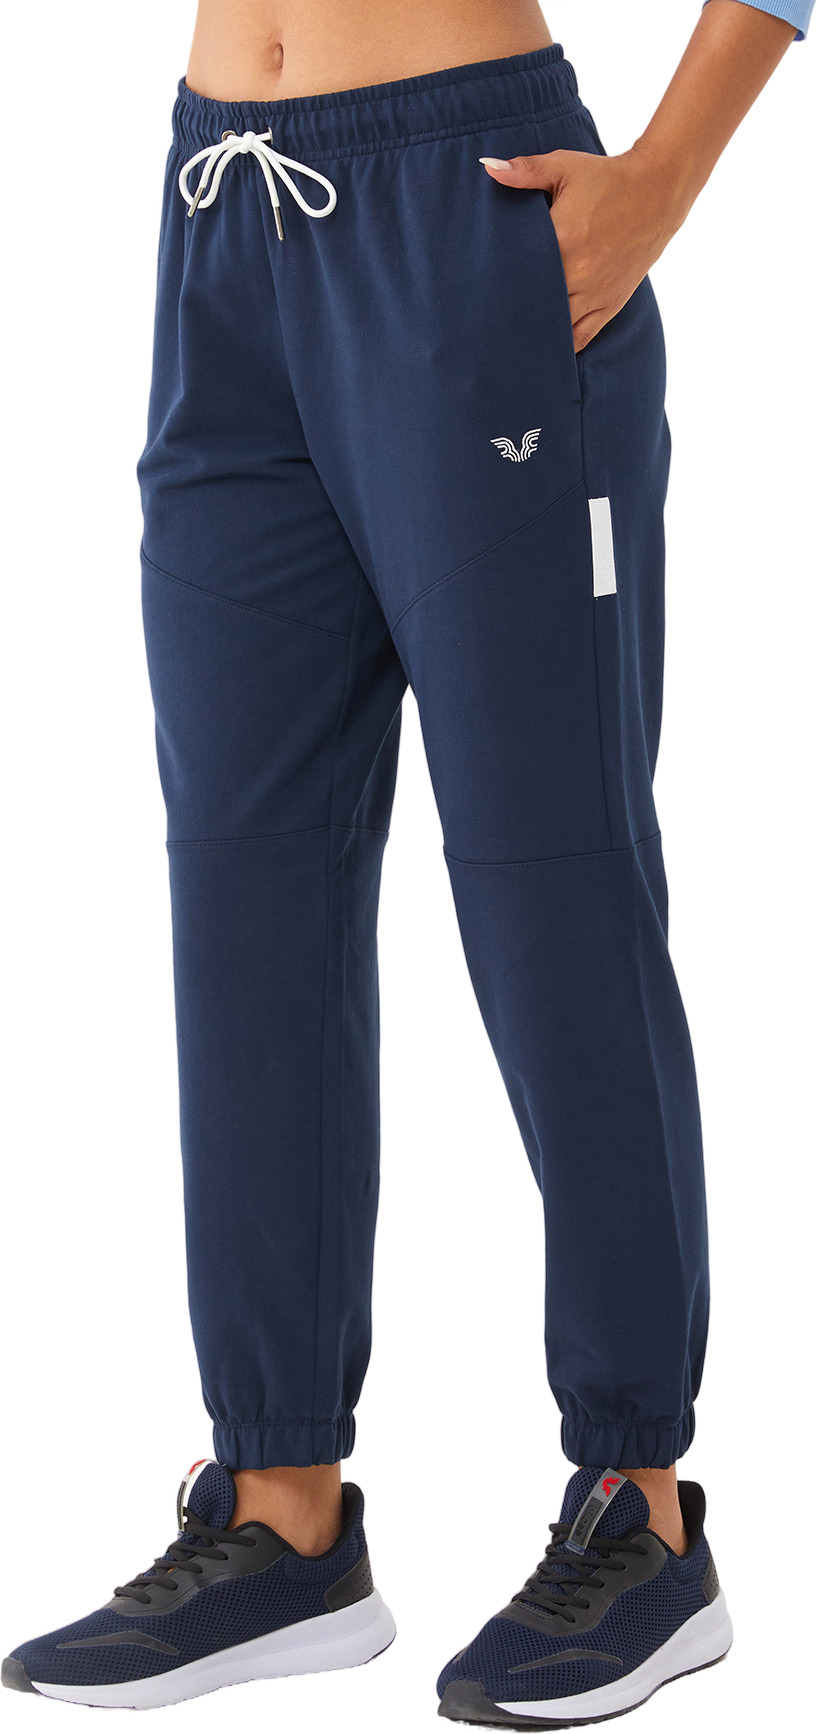 Спортивные брюки женские Bilcee Sports pants синие L